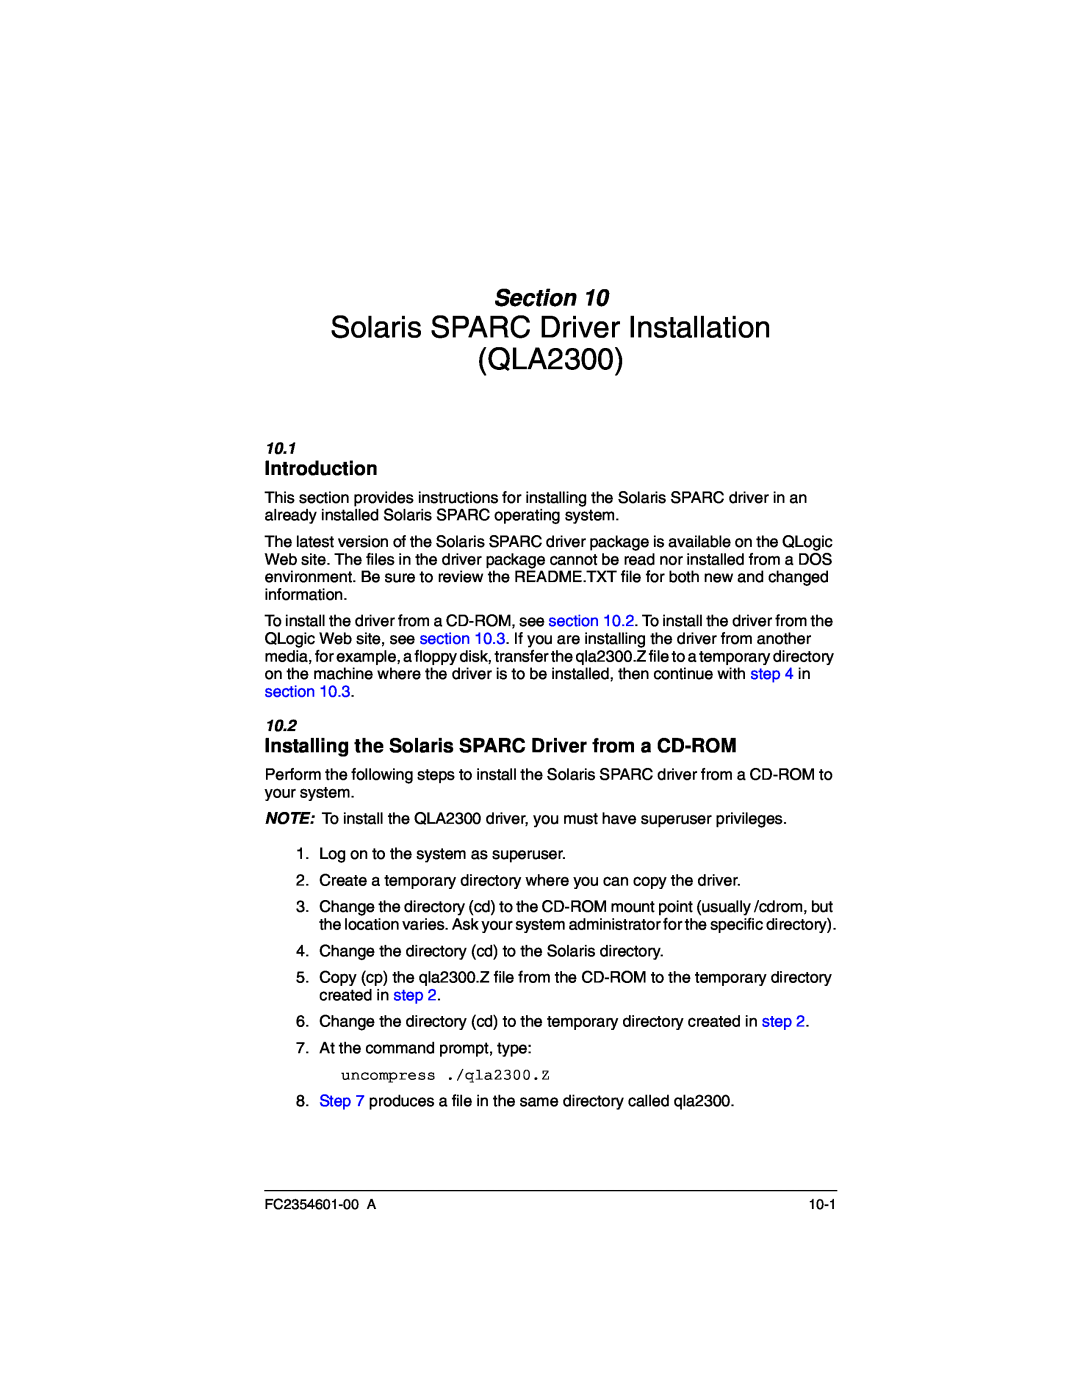 Q-Logic manual Solaris SPARC Driver Installation QLA2300, Installing the Solaris SPARC Driver from a CD-ROM, 10.1, 10.2 